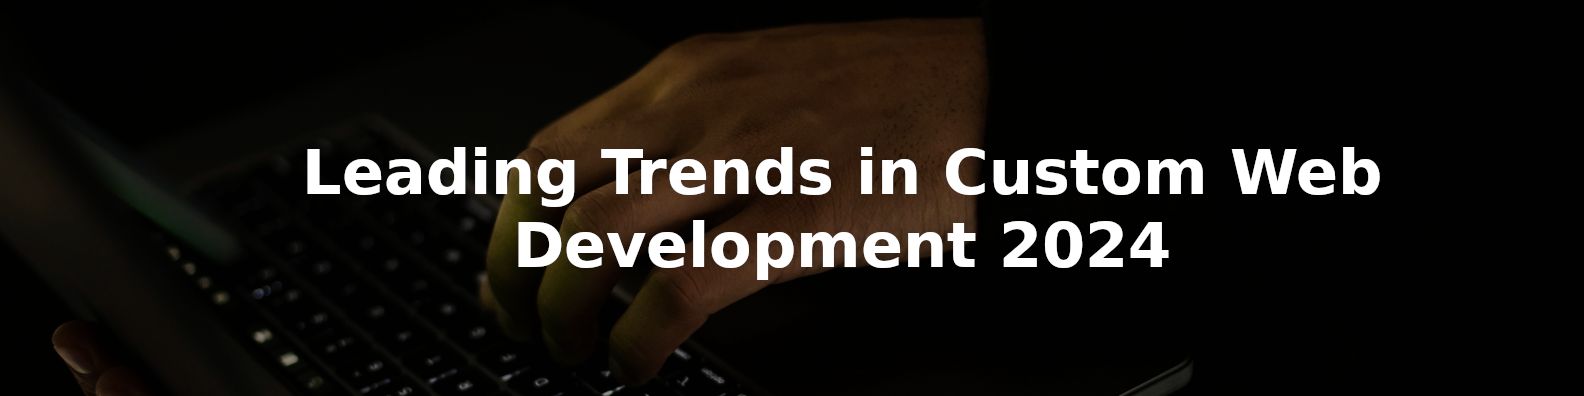 Leading Trends in Custom Web Development 2024